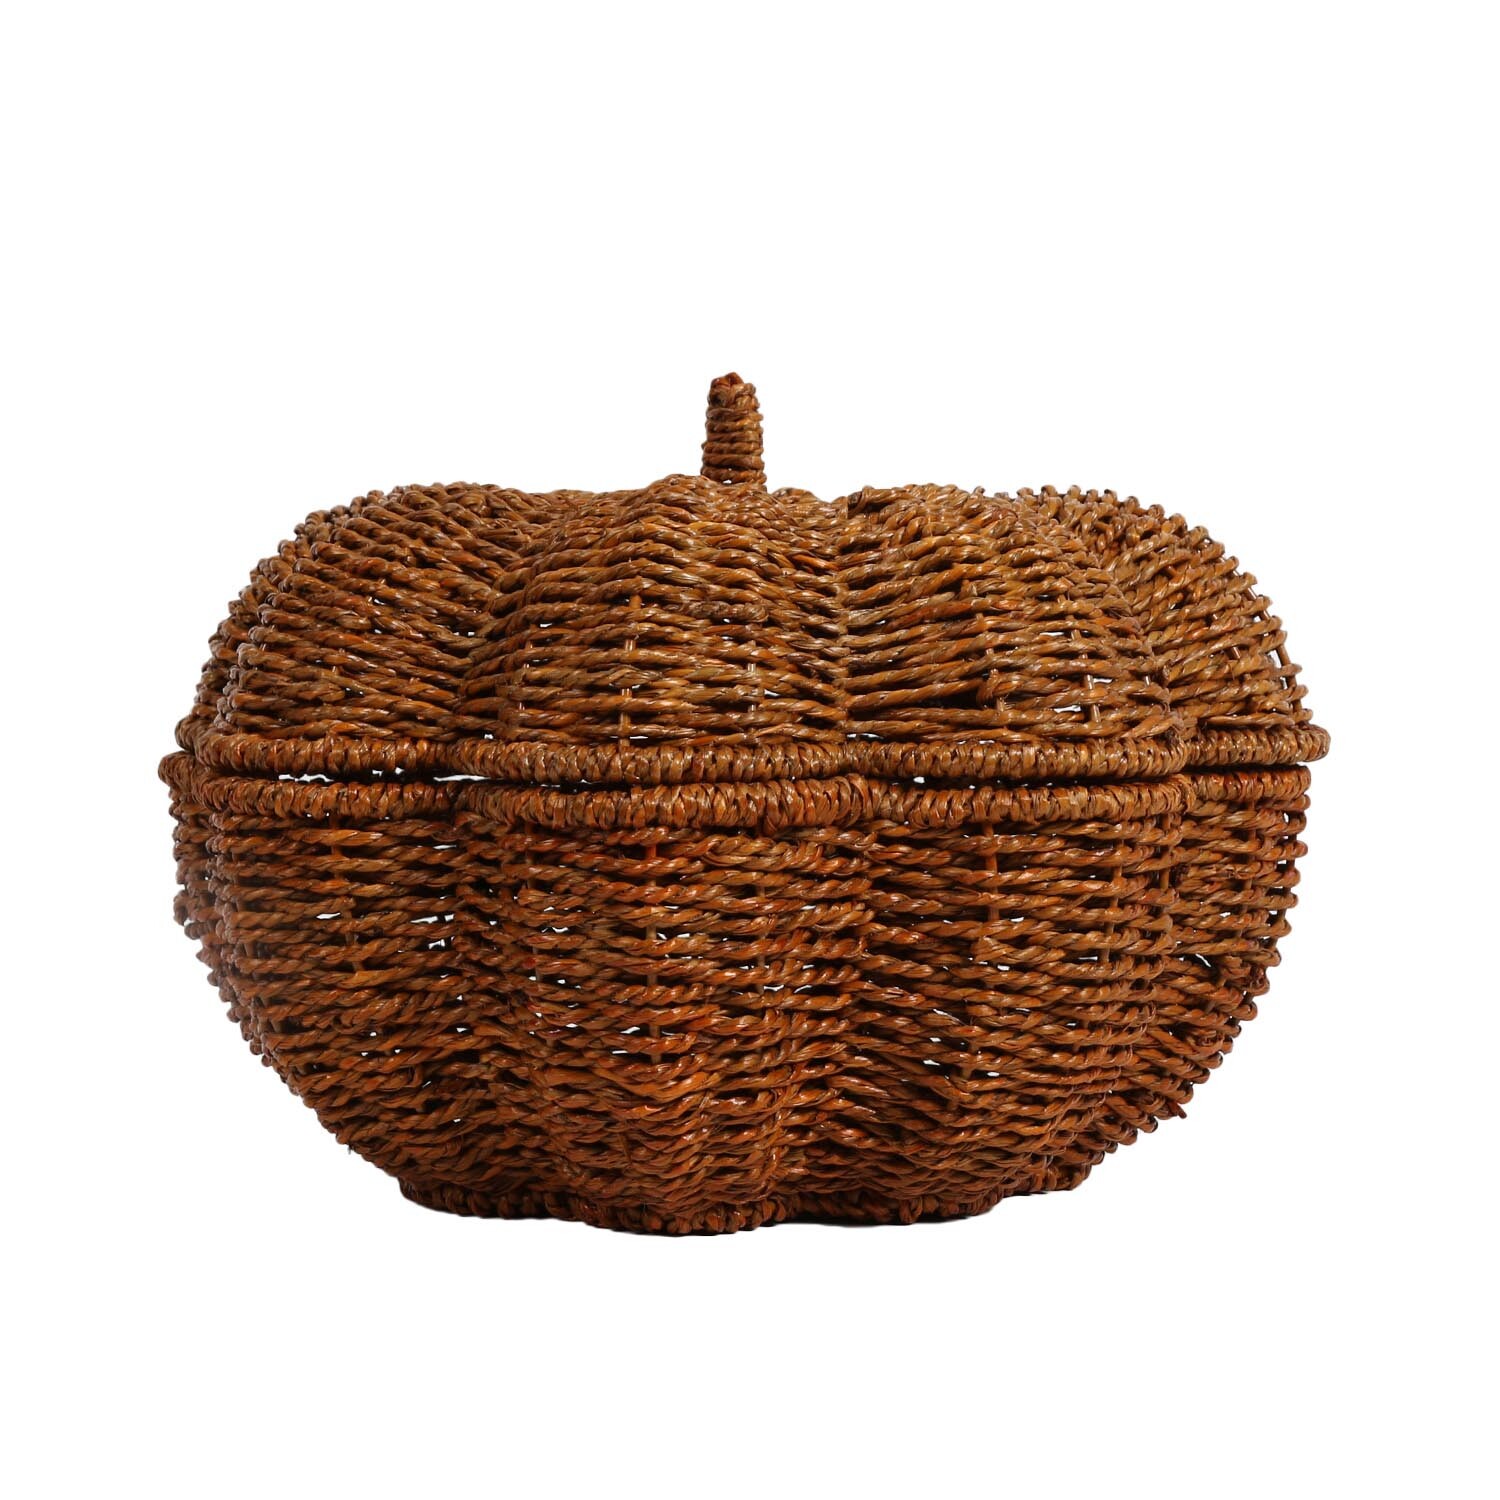 Autumnal Pumpkin Basket - Brown Image 1